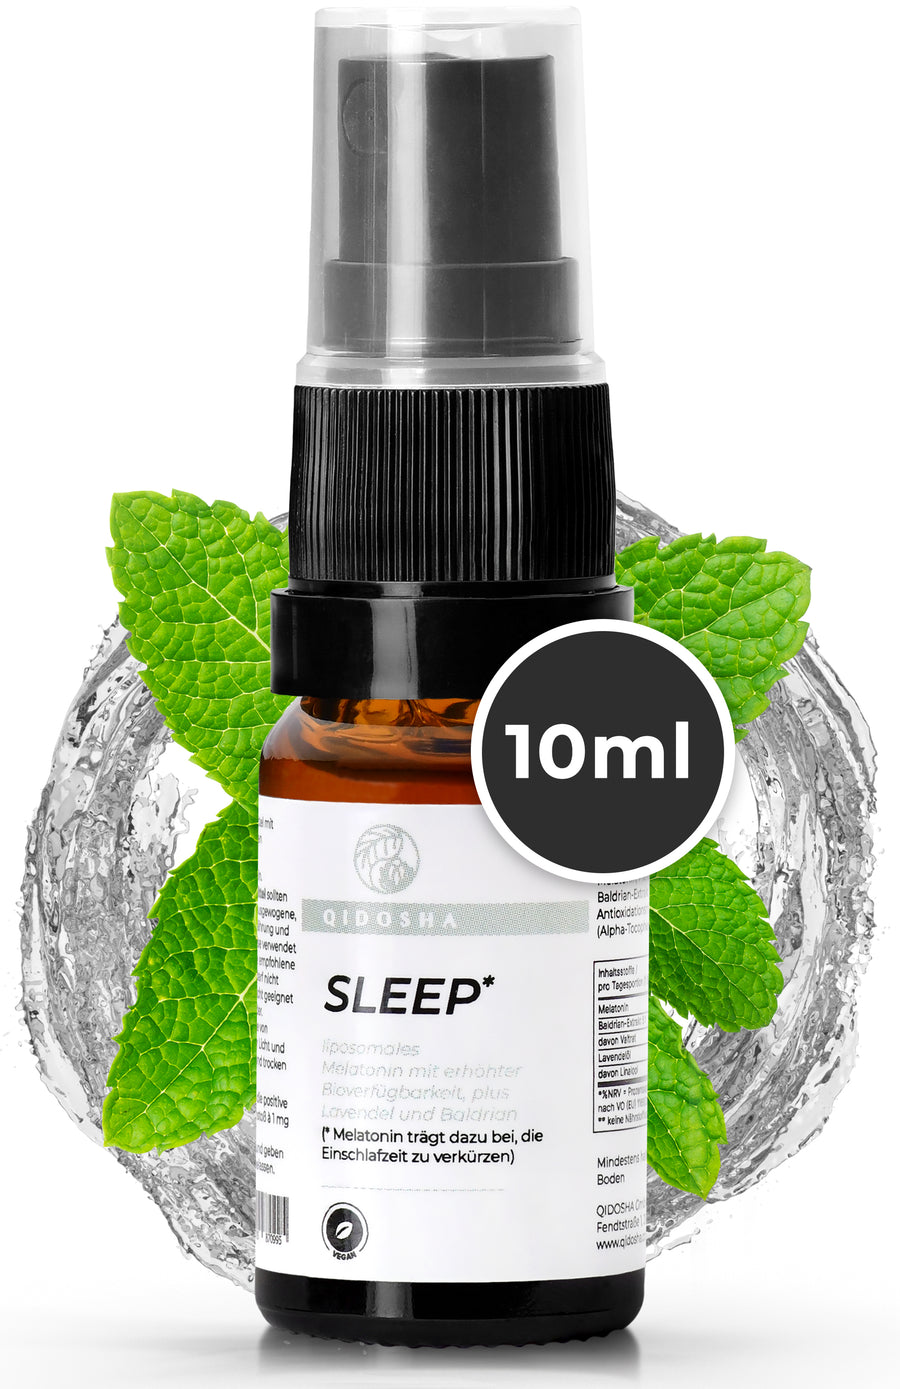 SLEEP (sleep time reduction)